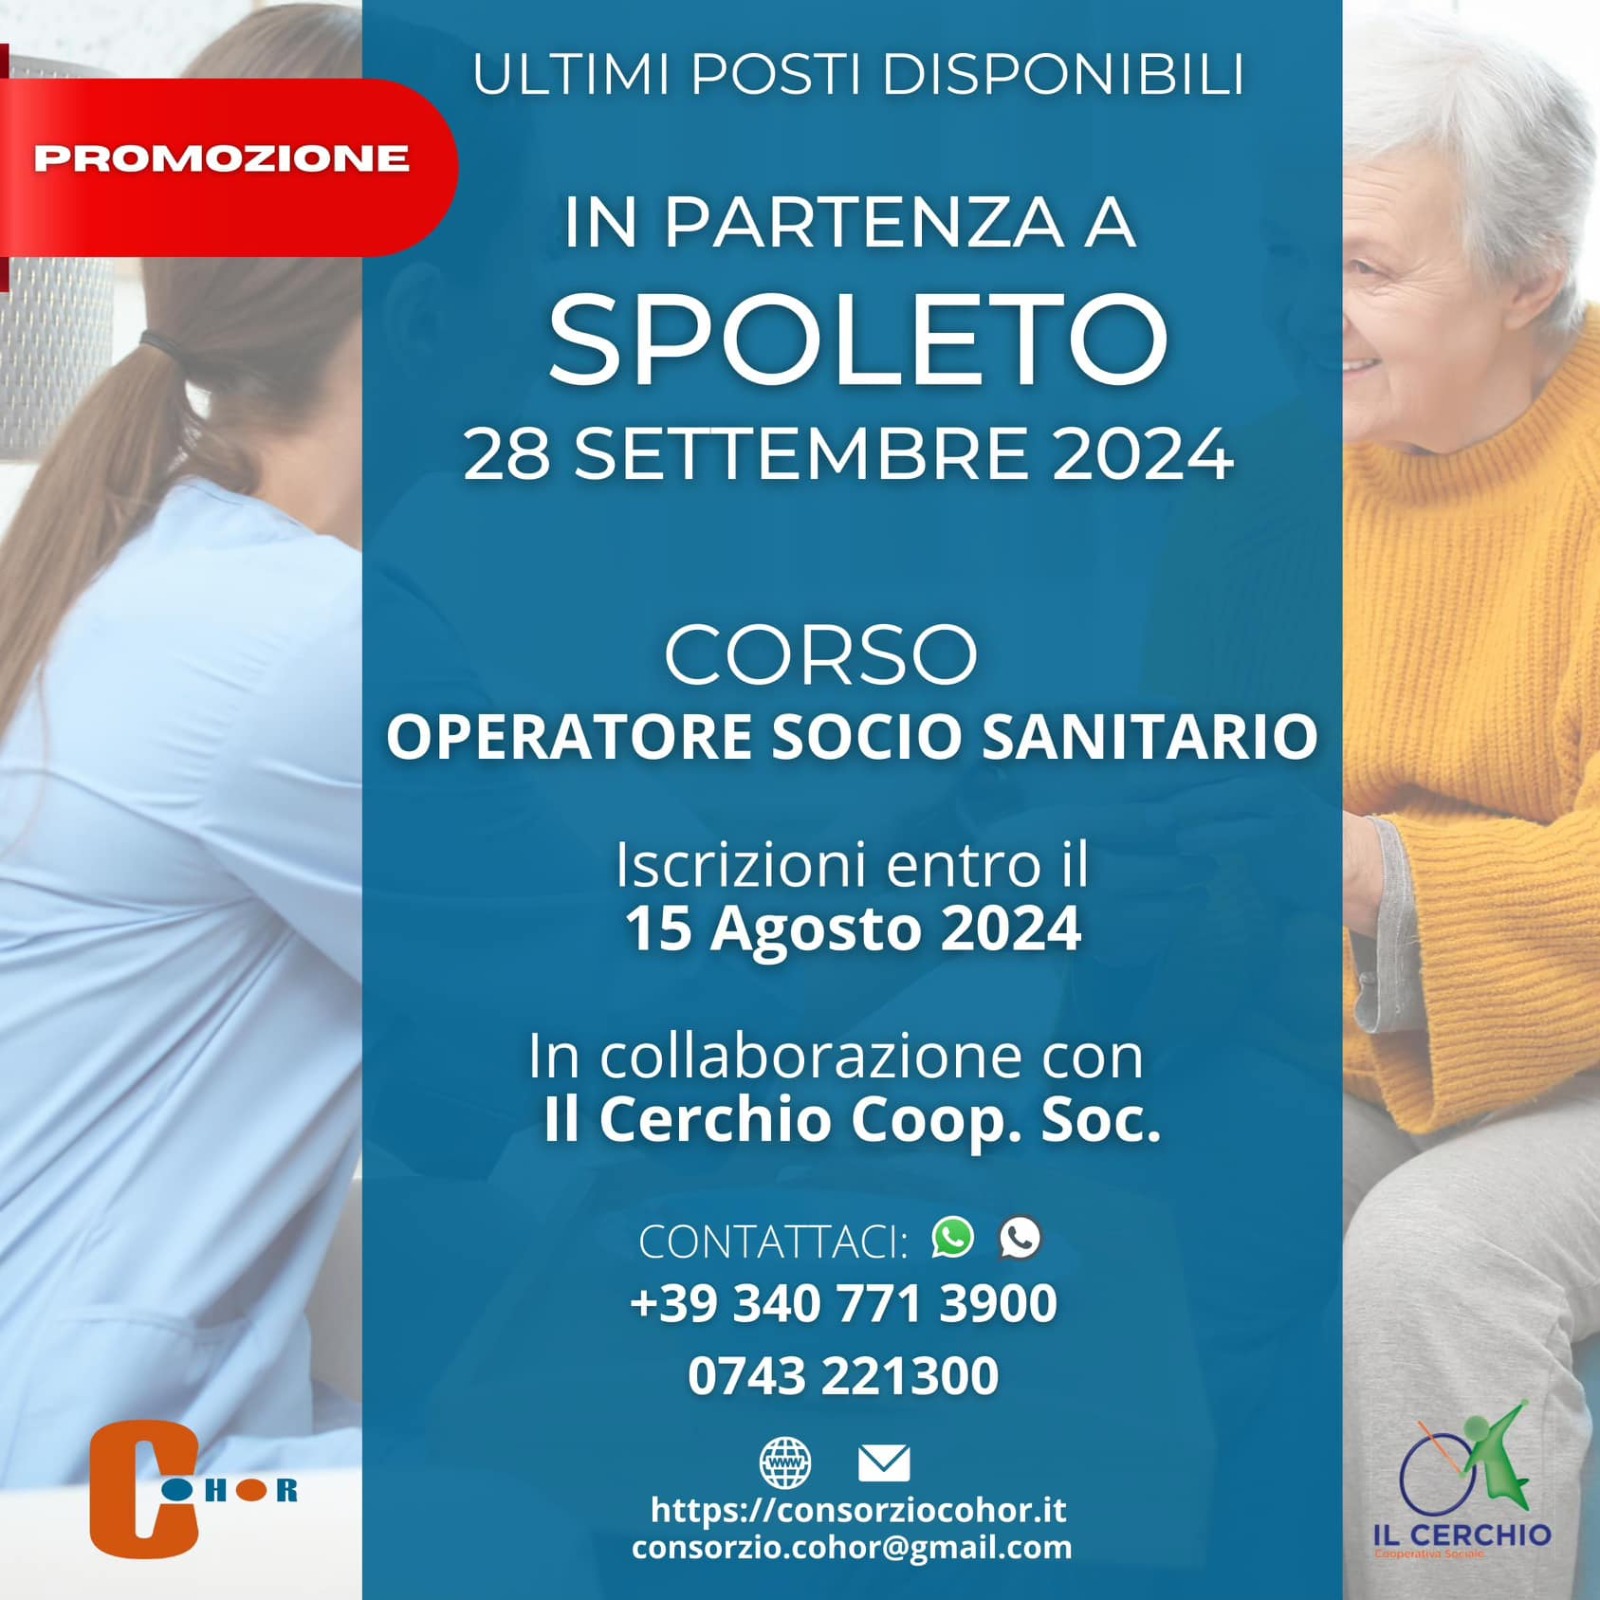 Corso di Operatore Socio Sanitario a Spoleto